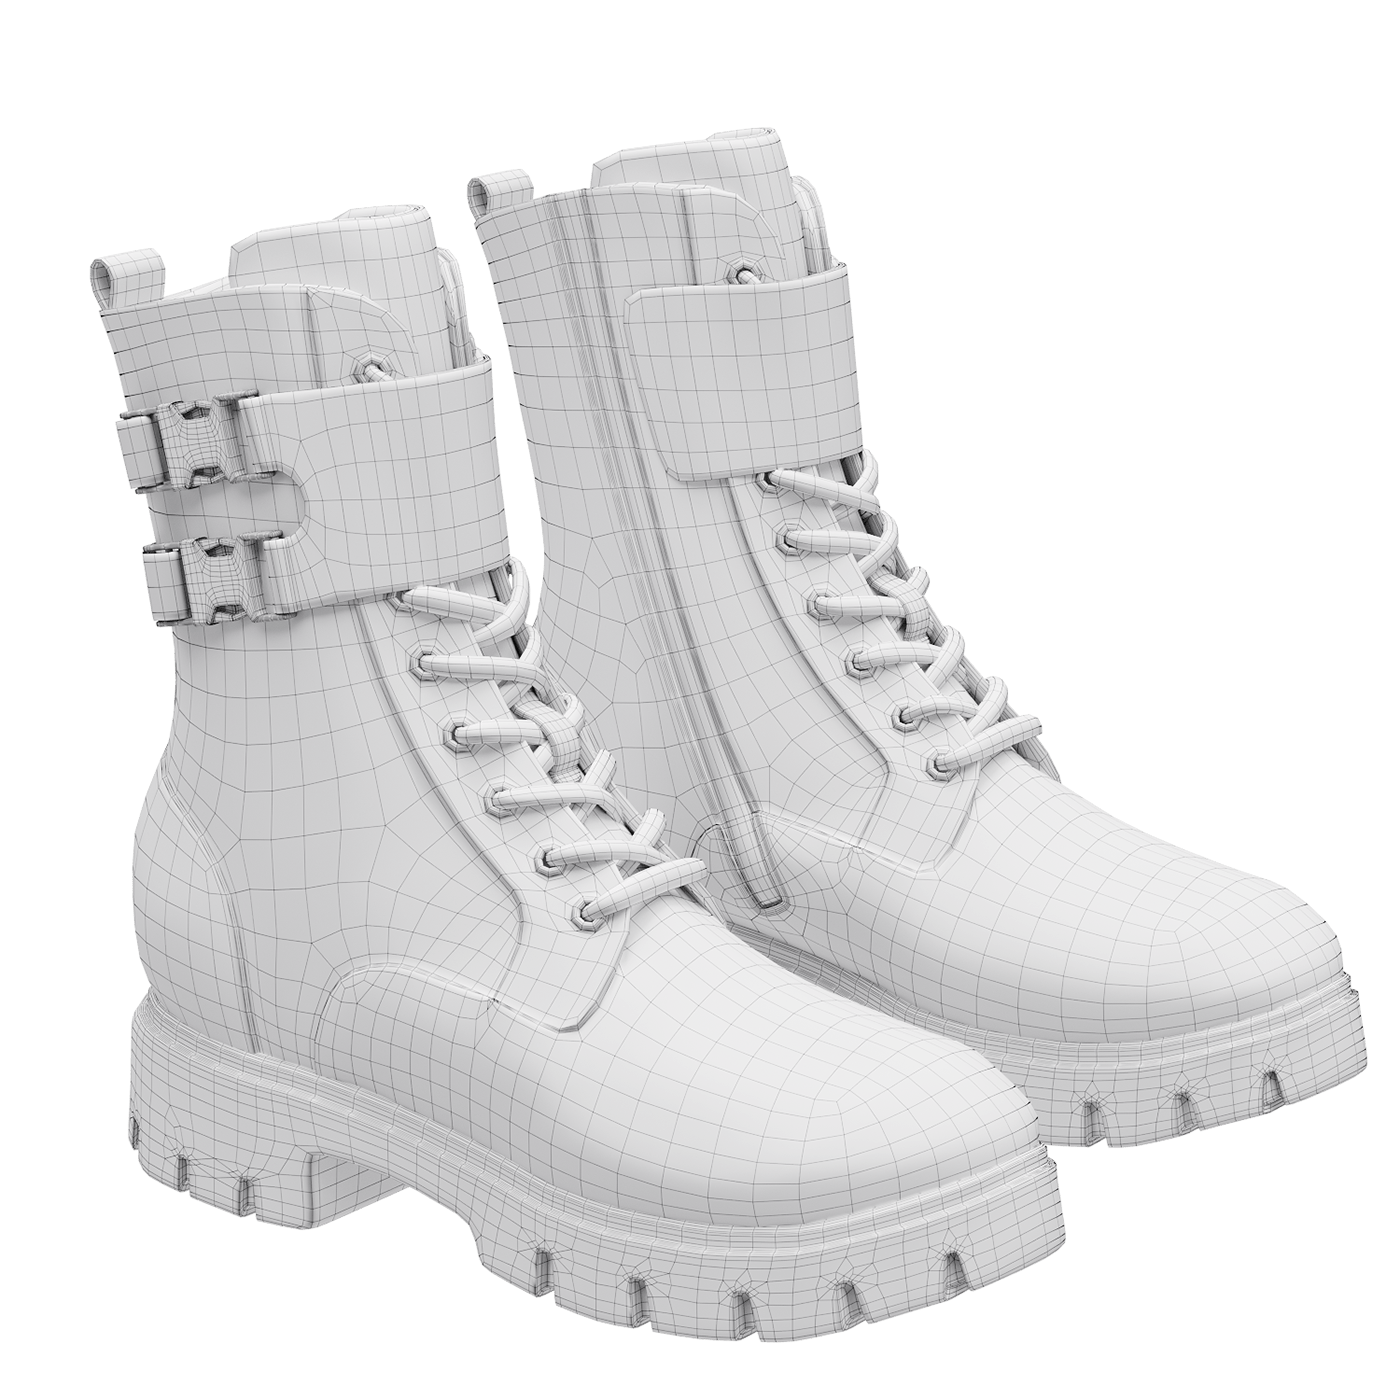 3D 3dmodel 3dsmax boots CG CGI Render rendering sale shoes